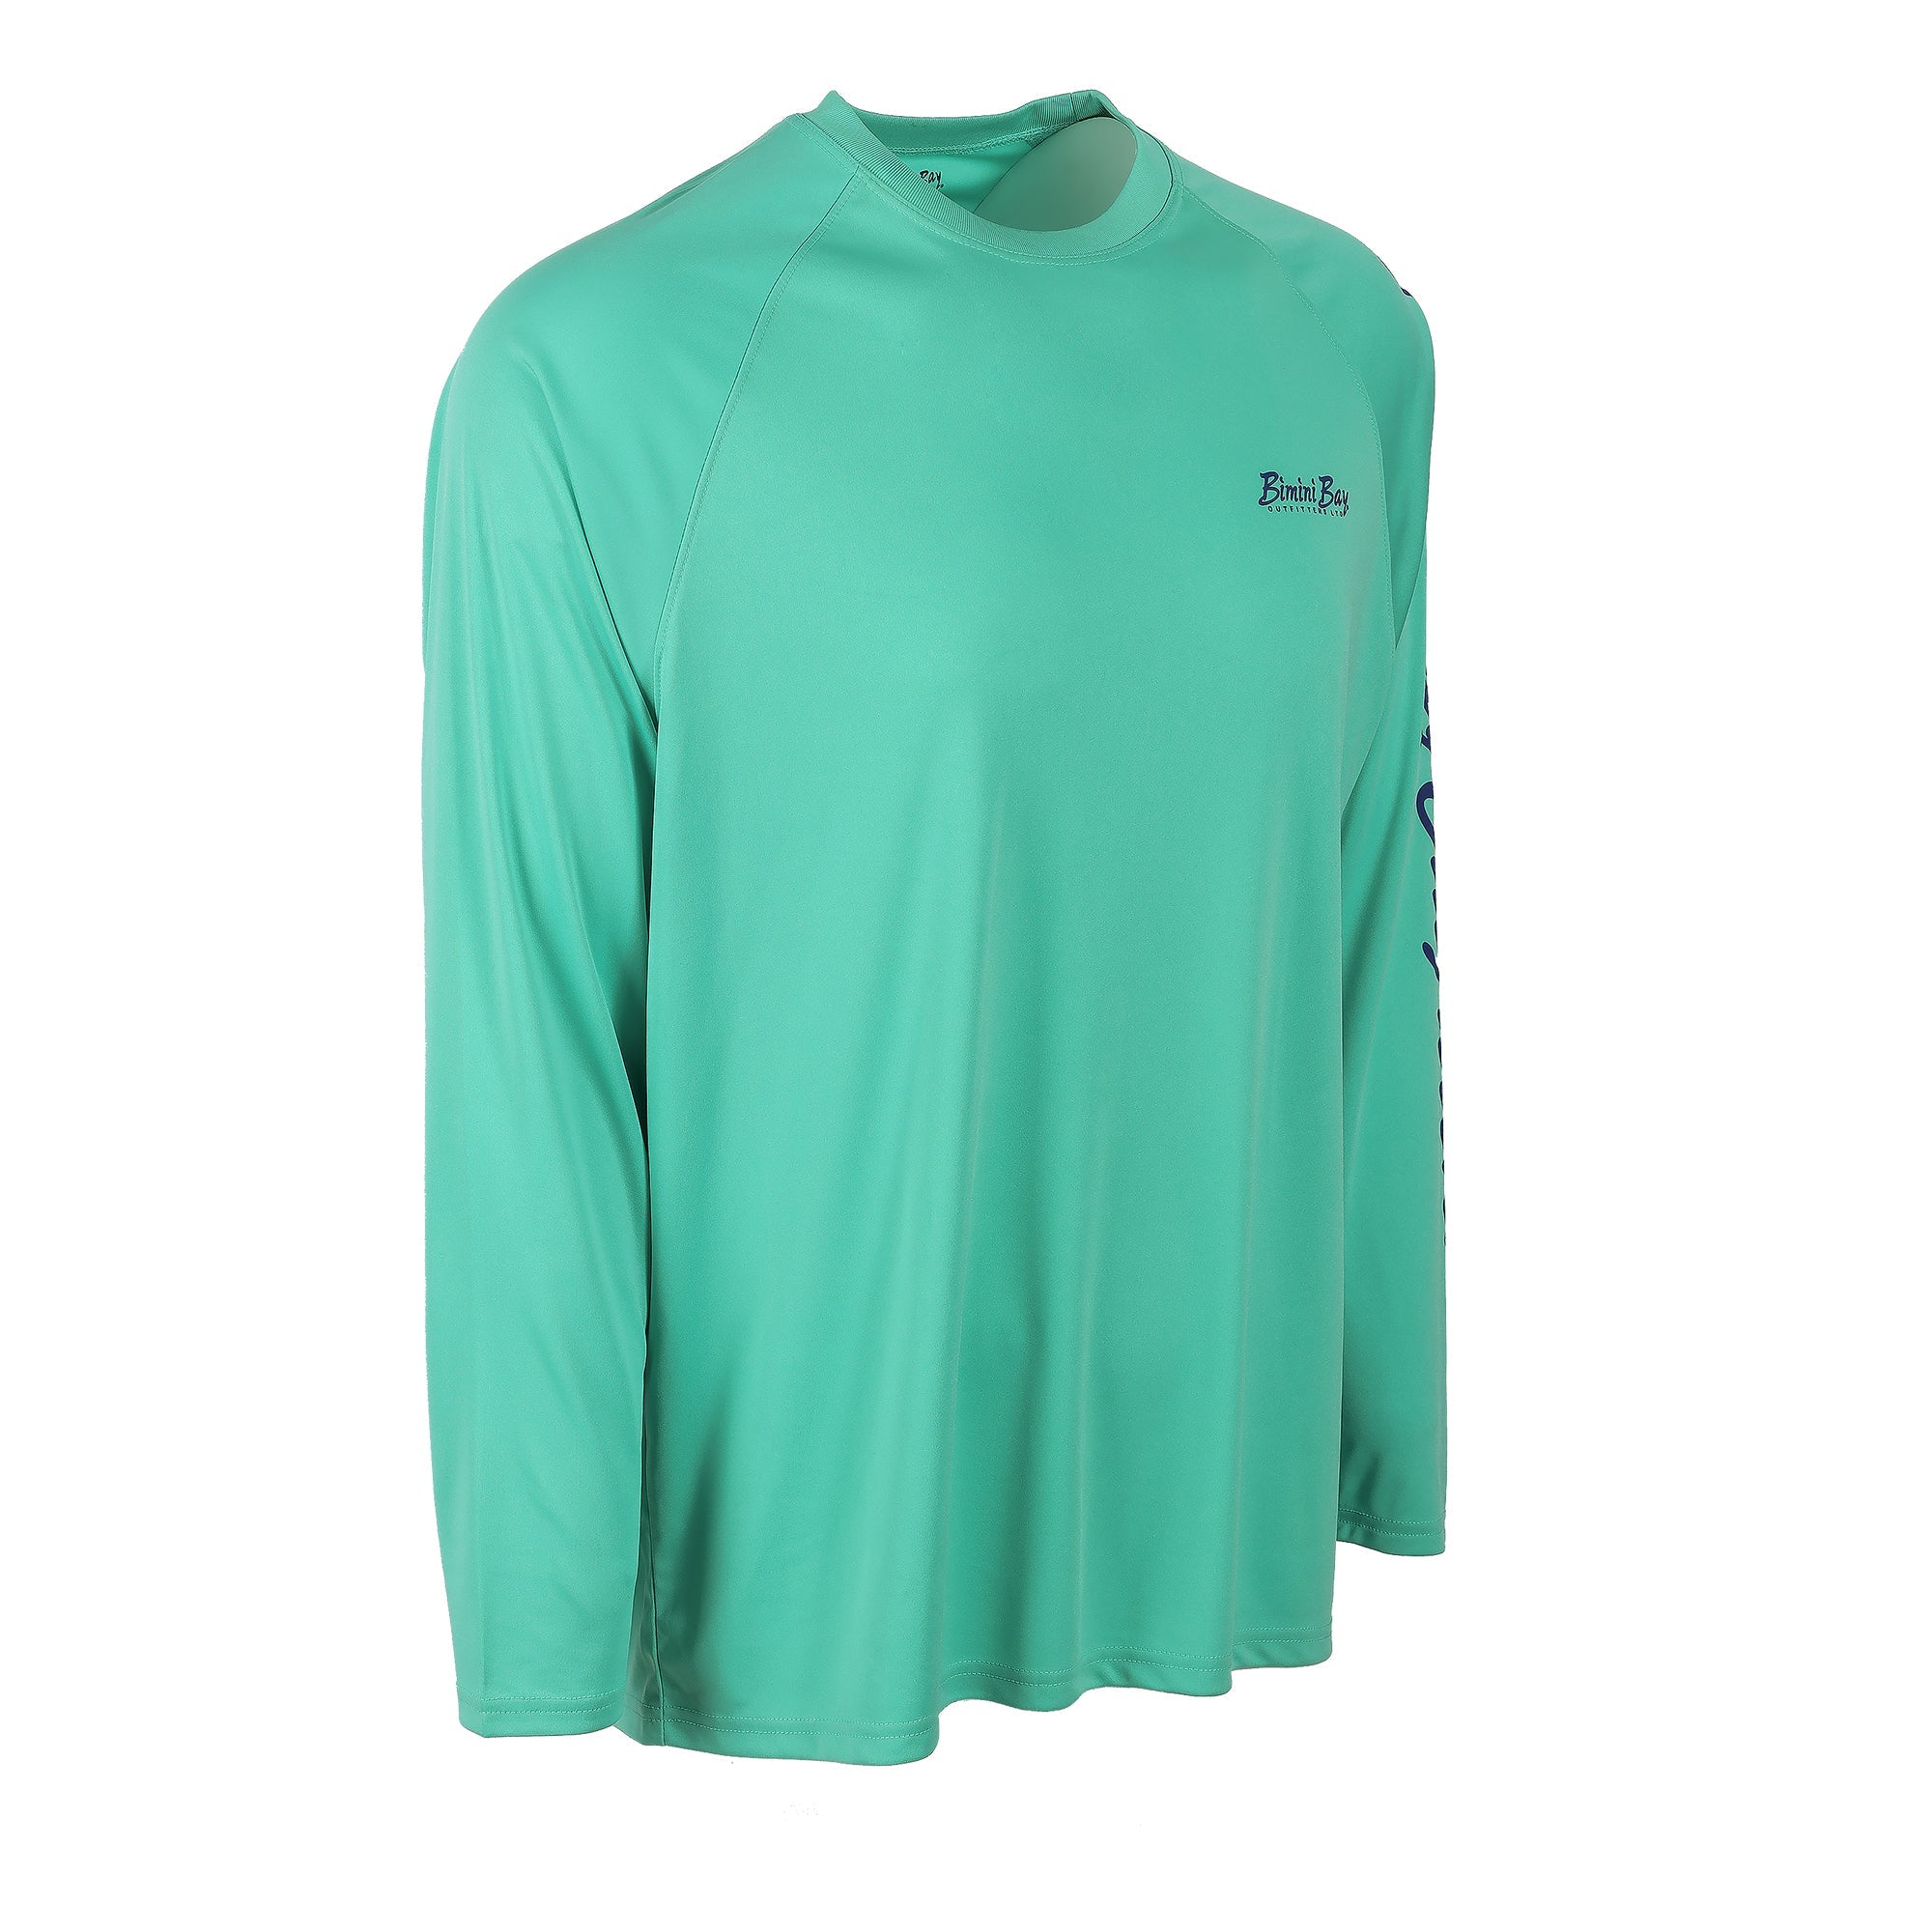 Bimini Bay Outfitters Hook M' Men's Long Sleeve Shirt - Southern Inshore  Species